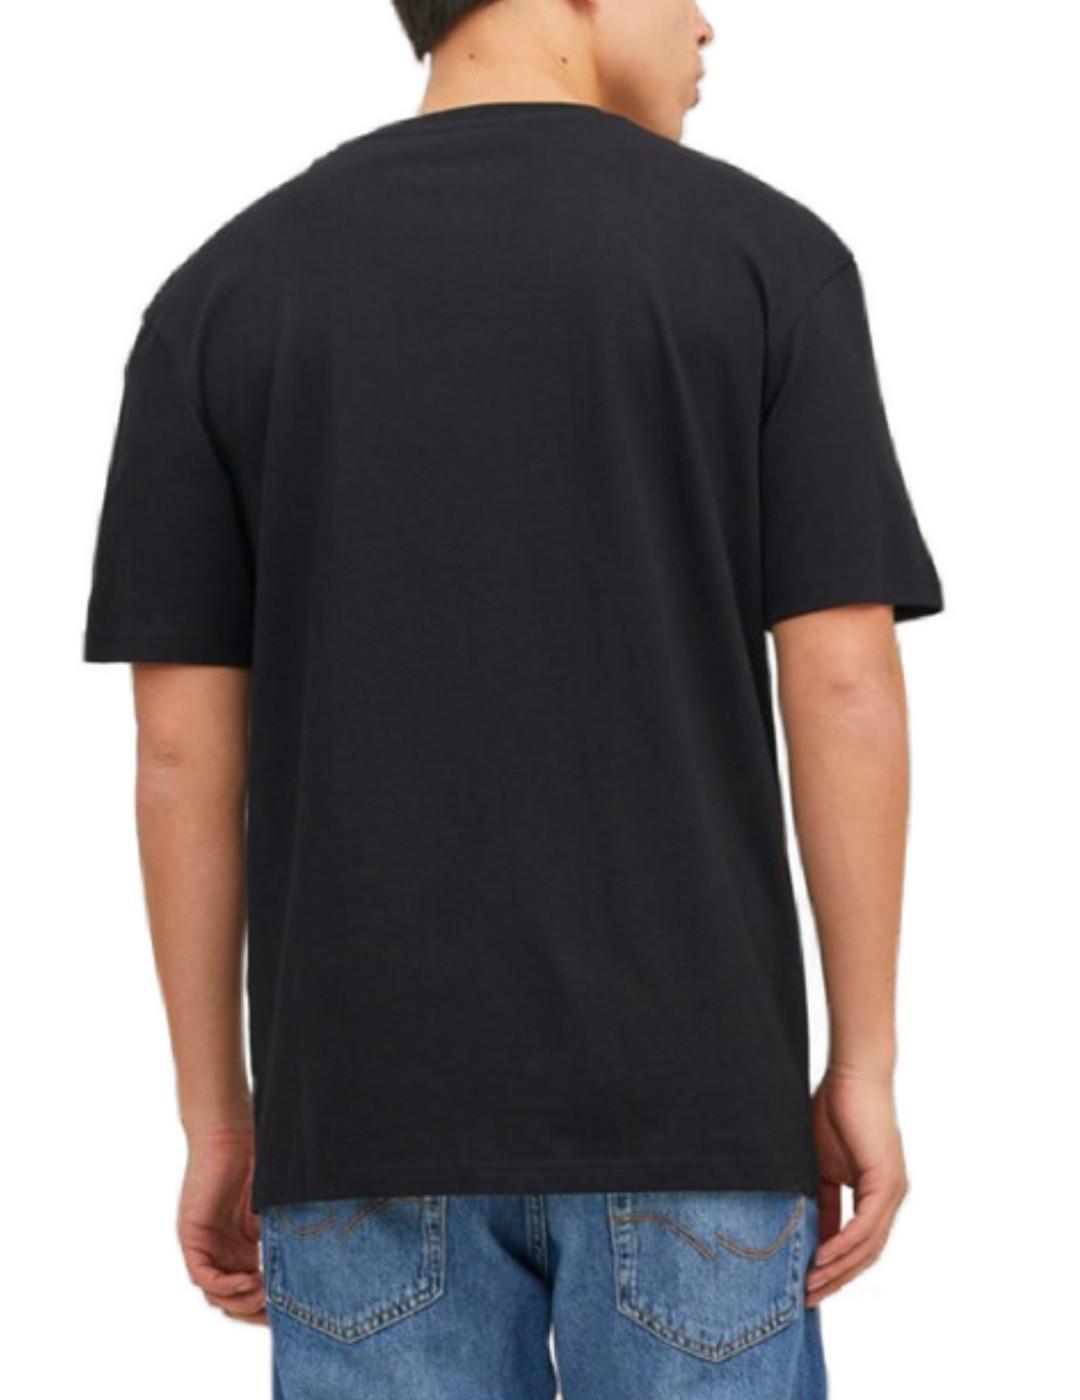 Camiseta Jack&Jones Star negra de manga corta para hombre